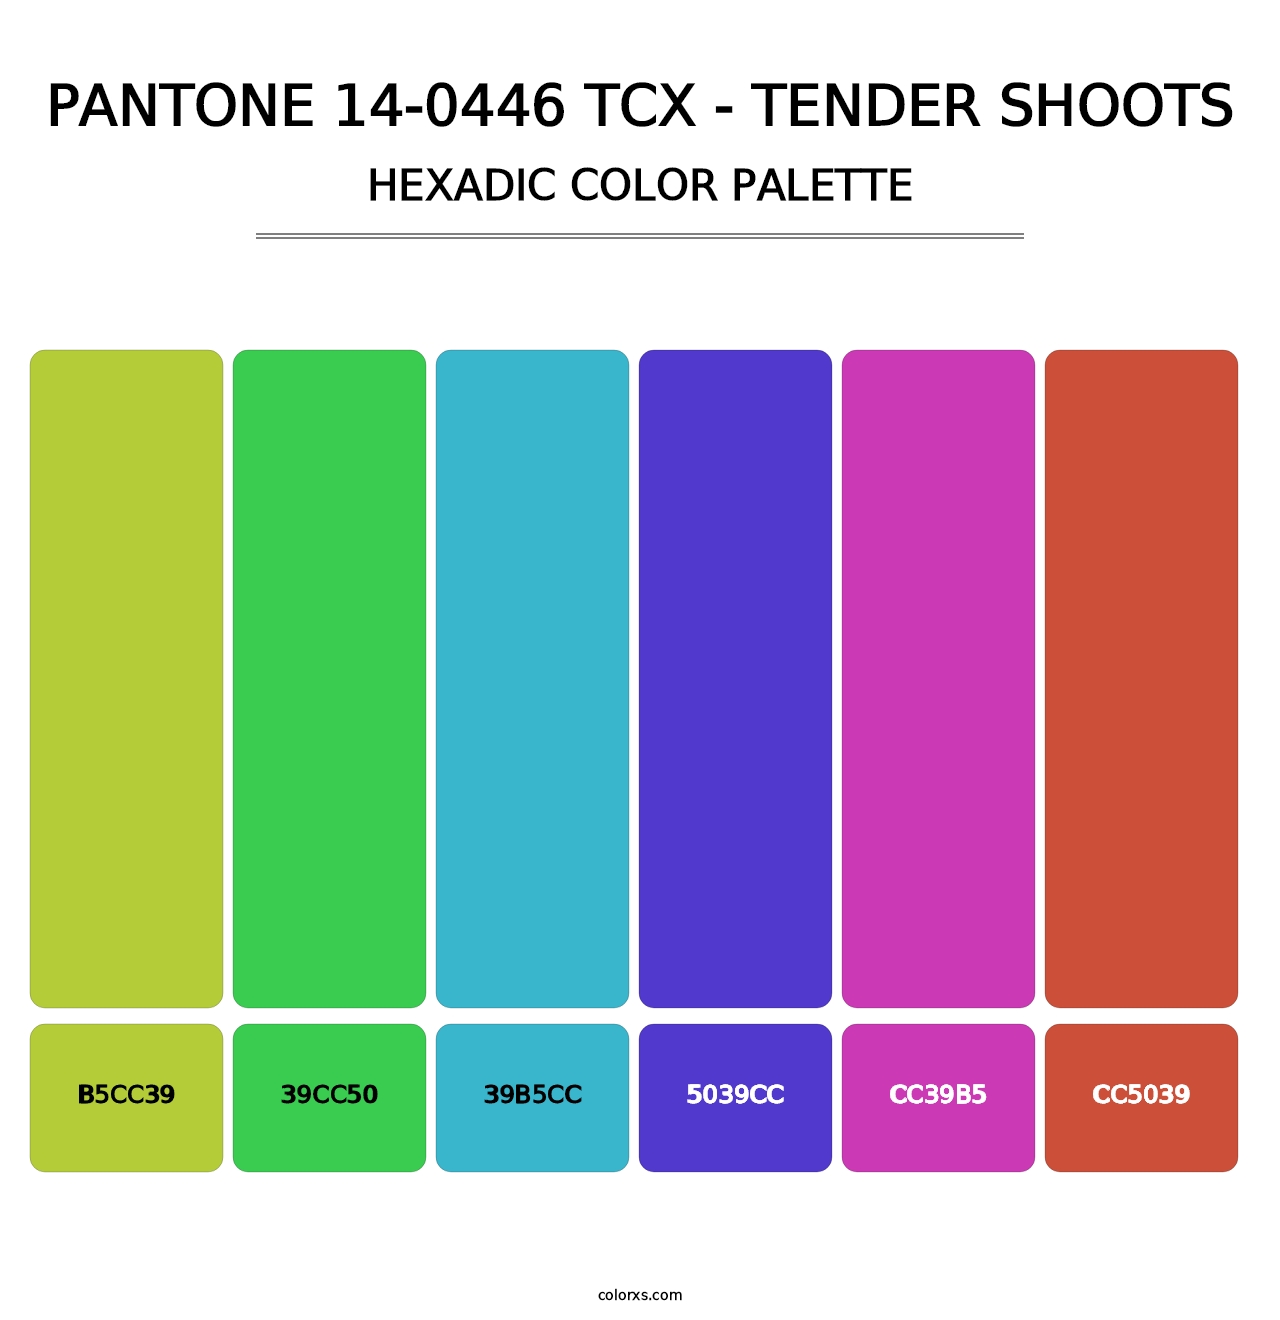 PANTONE 14-0446 TCX - Tender Shoots - Hexadic Color Palette